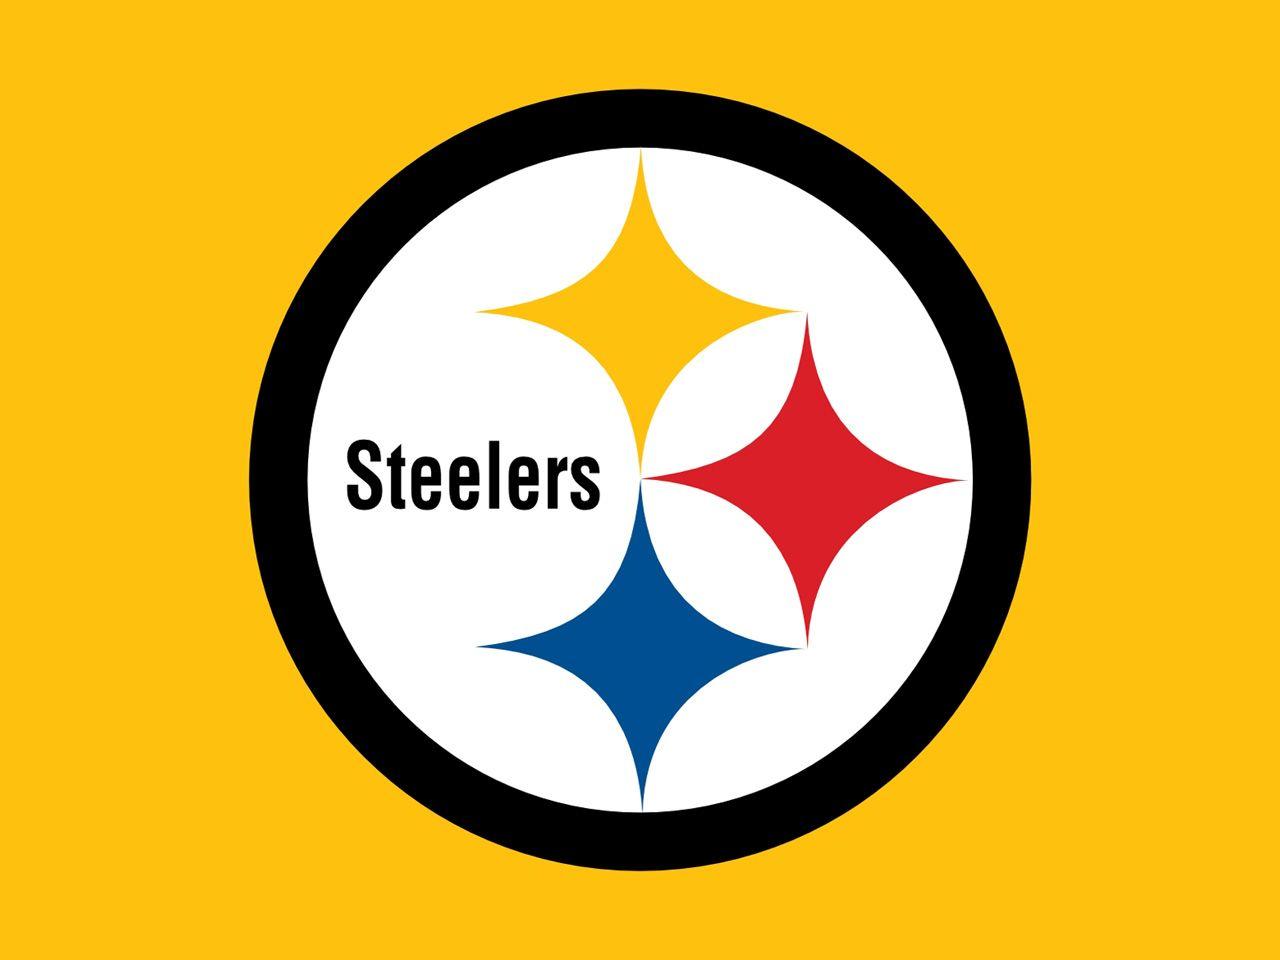 Pittsburgh Steelers wallpaper background. Pittsburgh Steelers